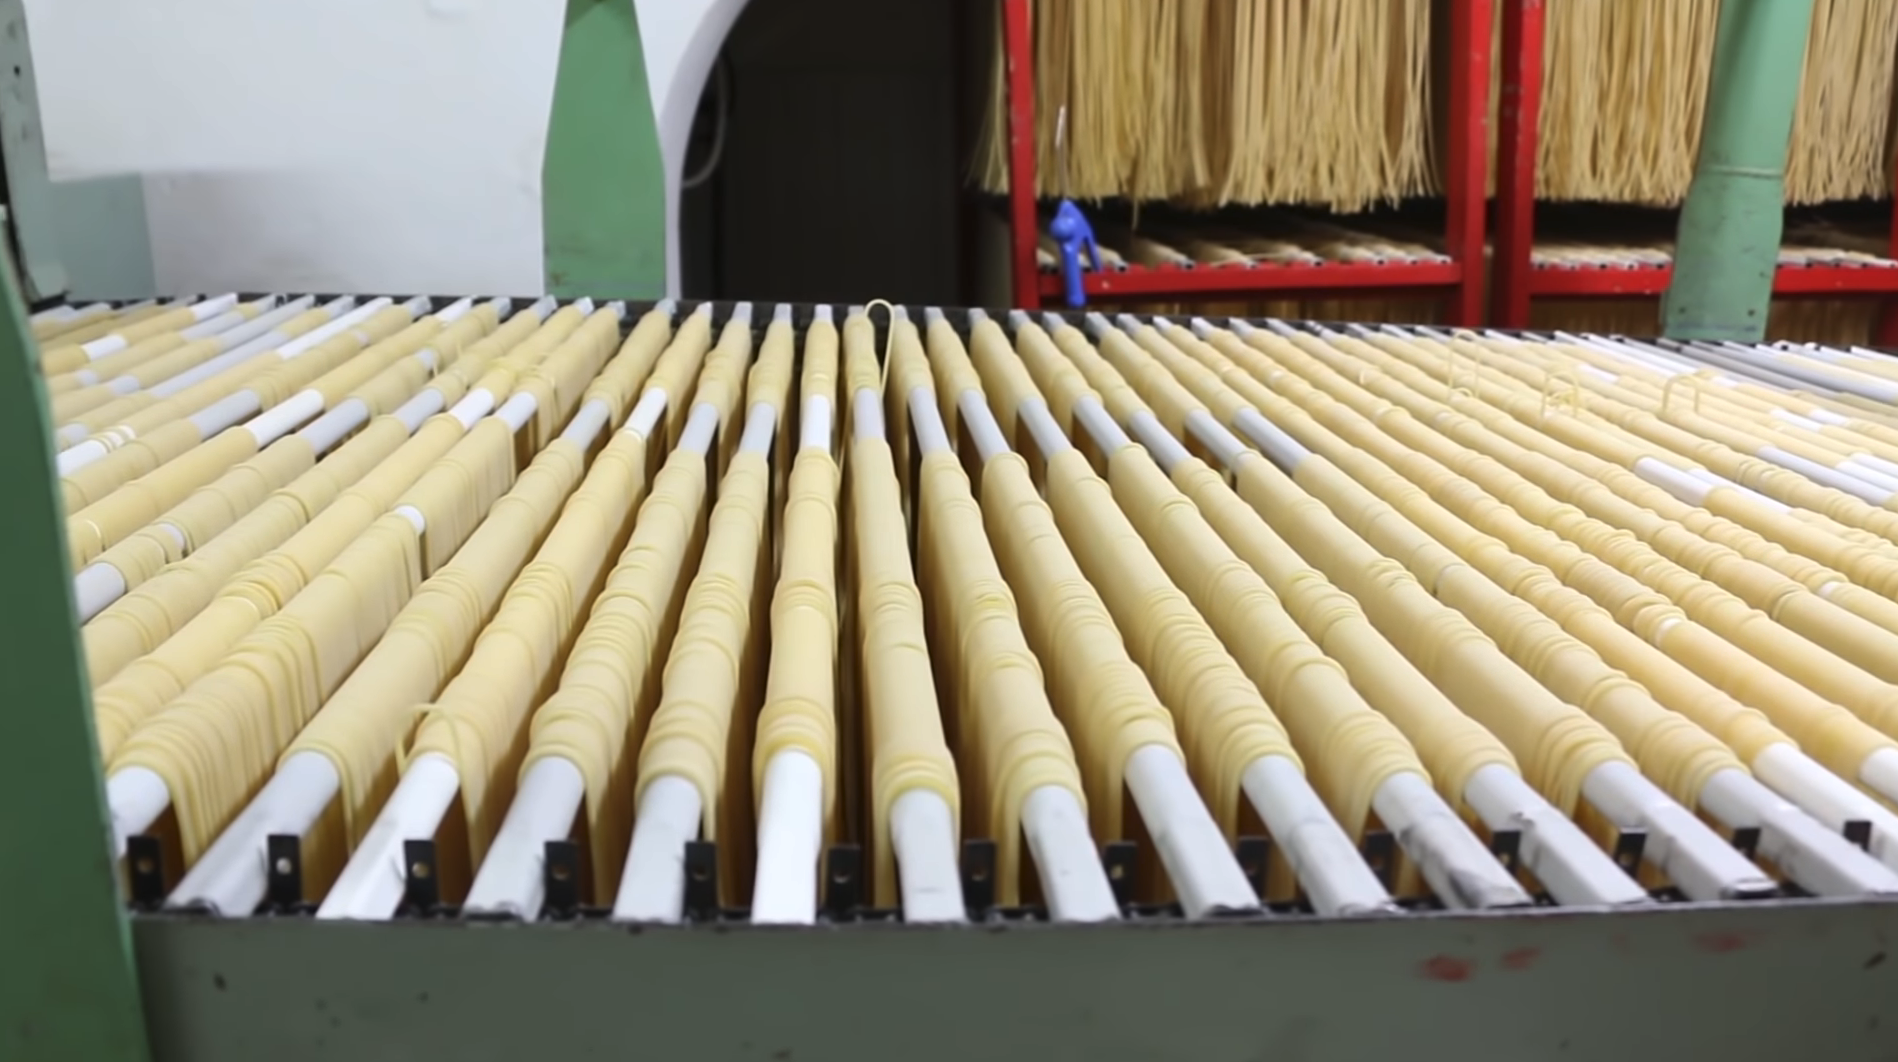 Rows of spaghetti drying